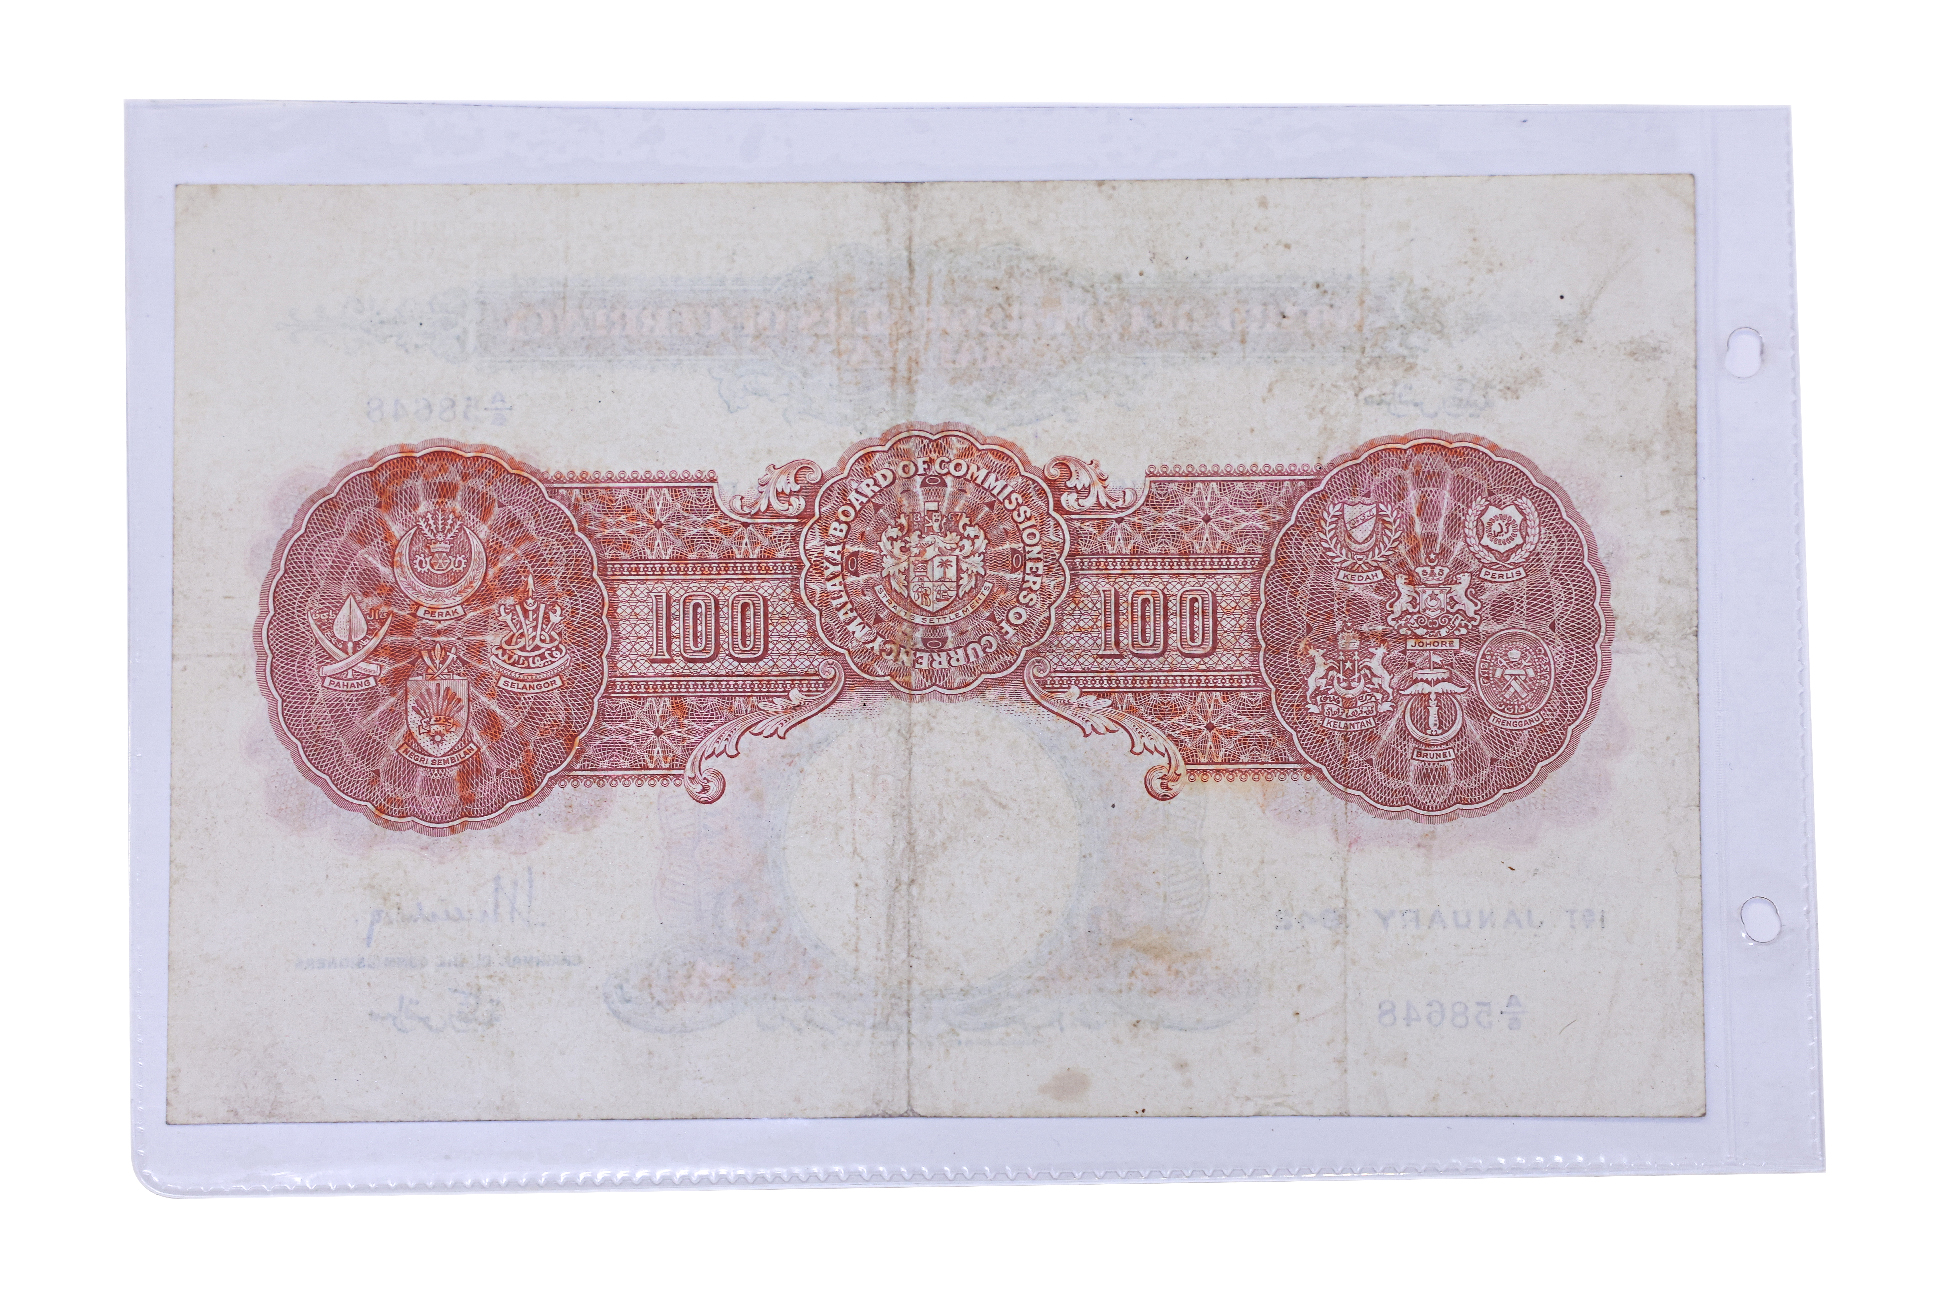 MALAYA 100 DOLLARS 1942 - Image 2 of 7